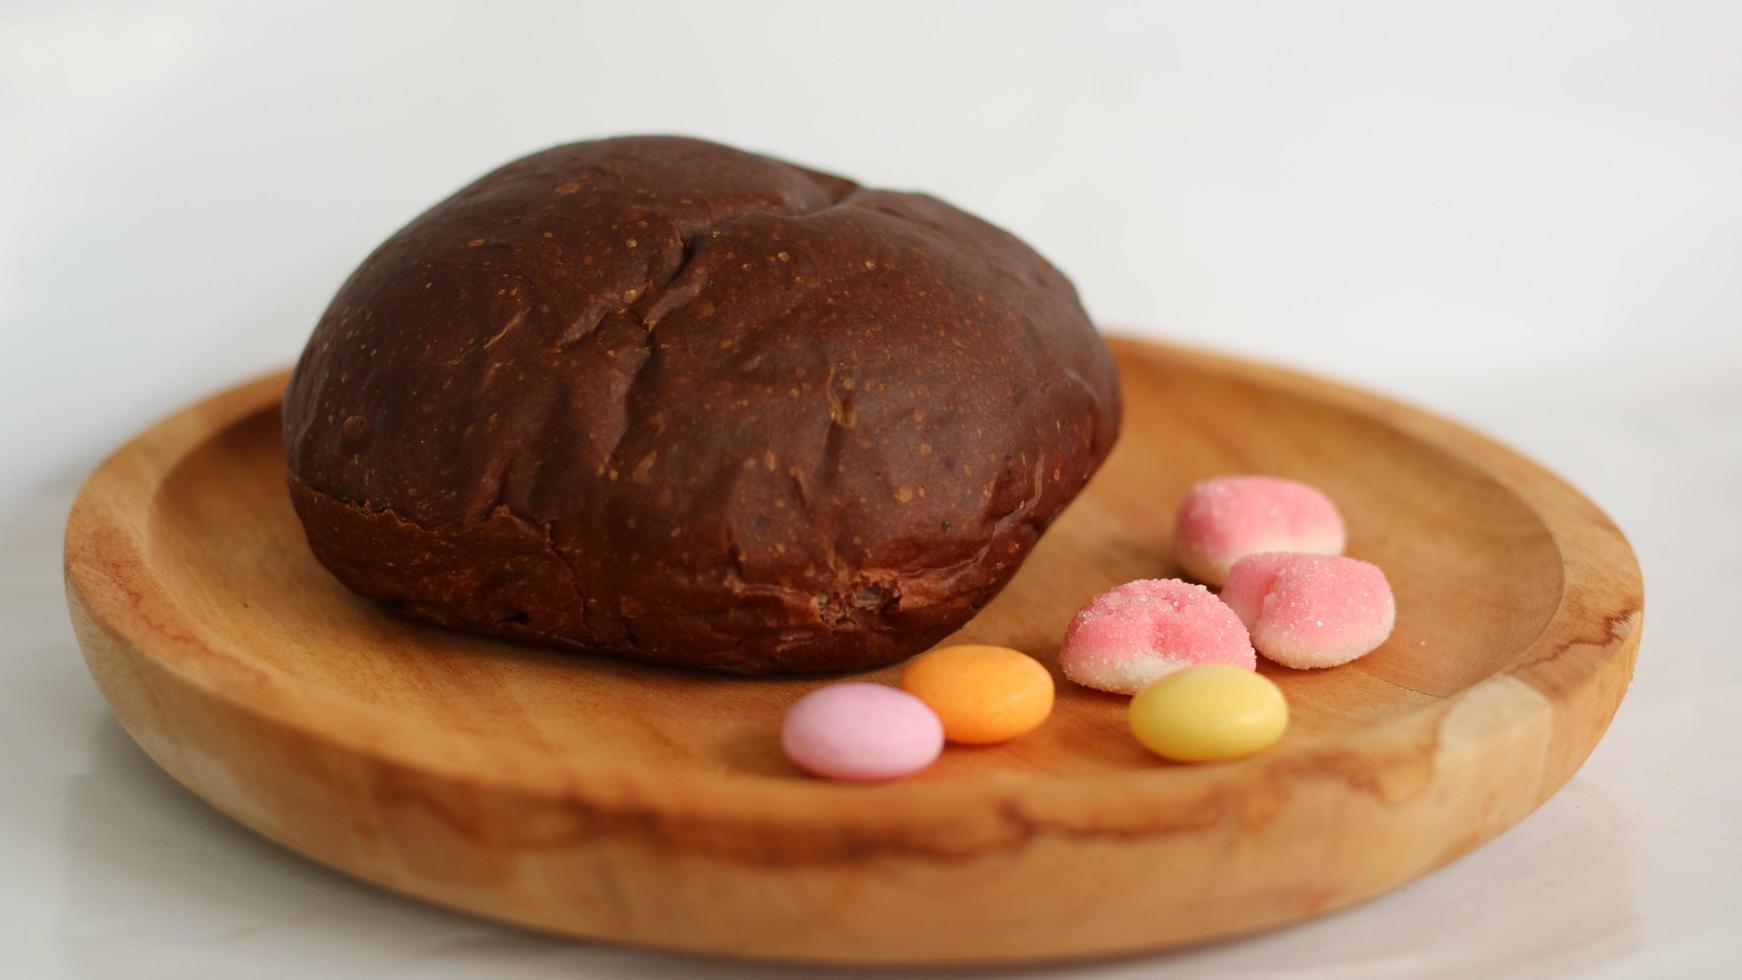 donker bruin brood en zes schattig snoepjes foto